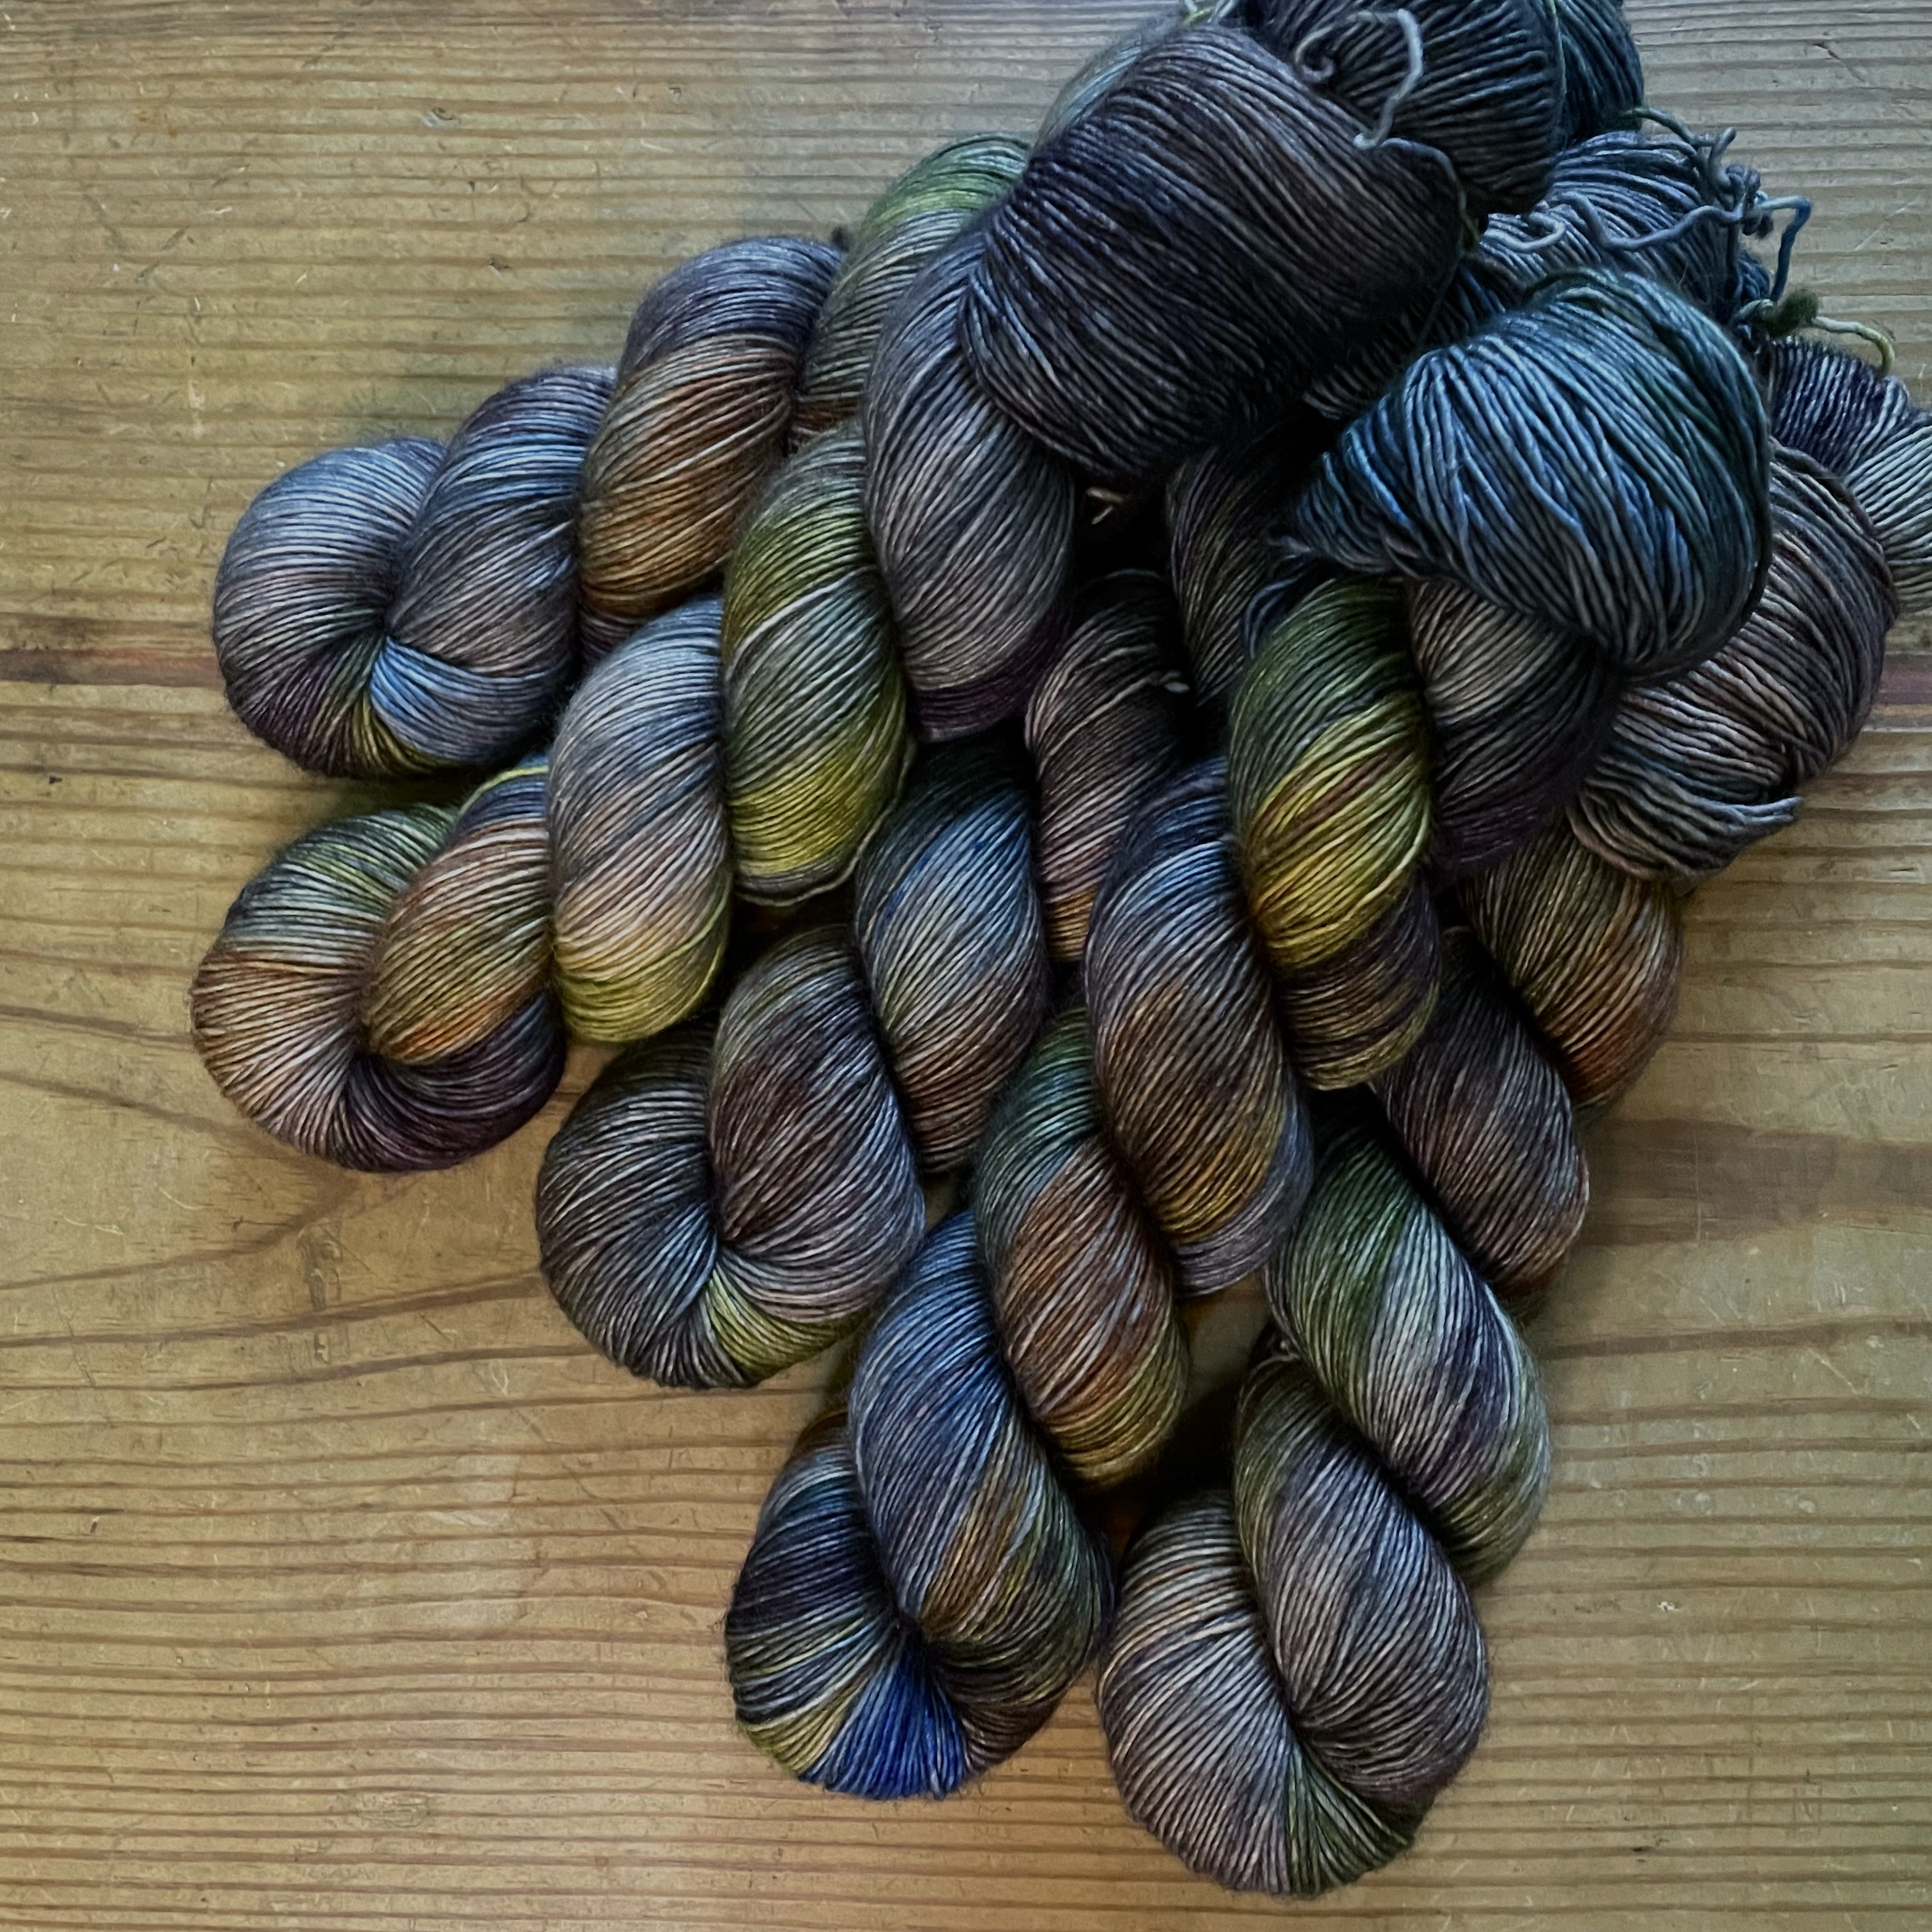 Misty Pines Hand-Dyed Sock Yarn Kit - Pattern